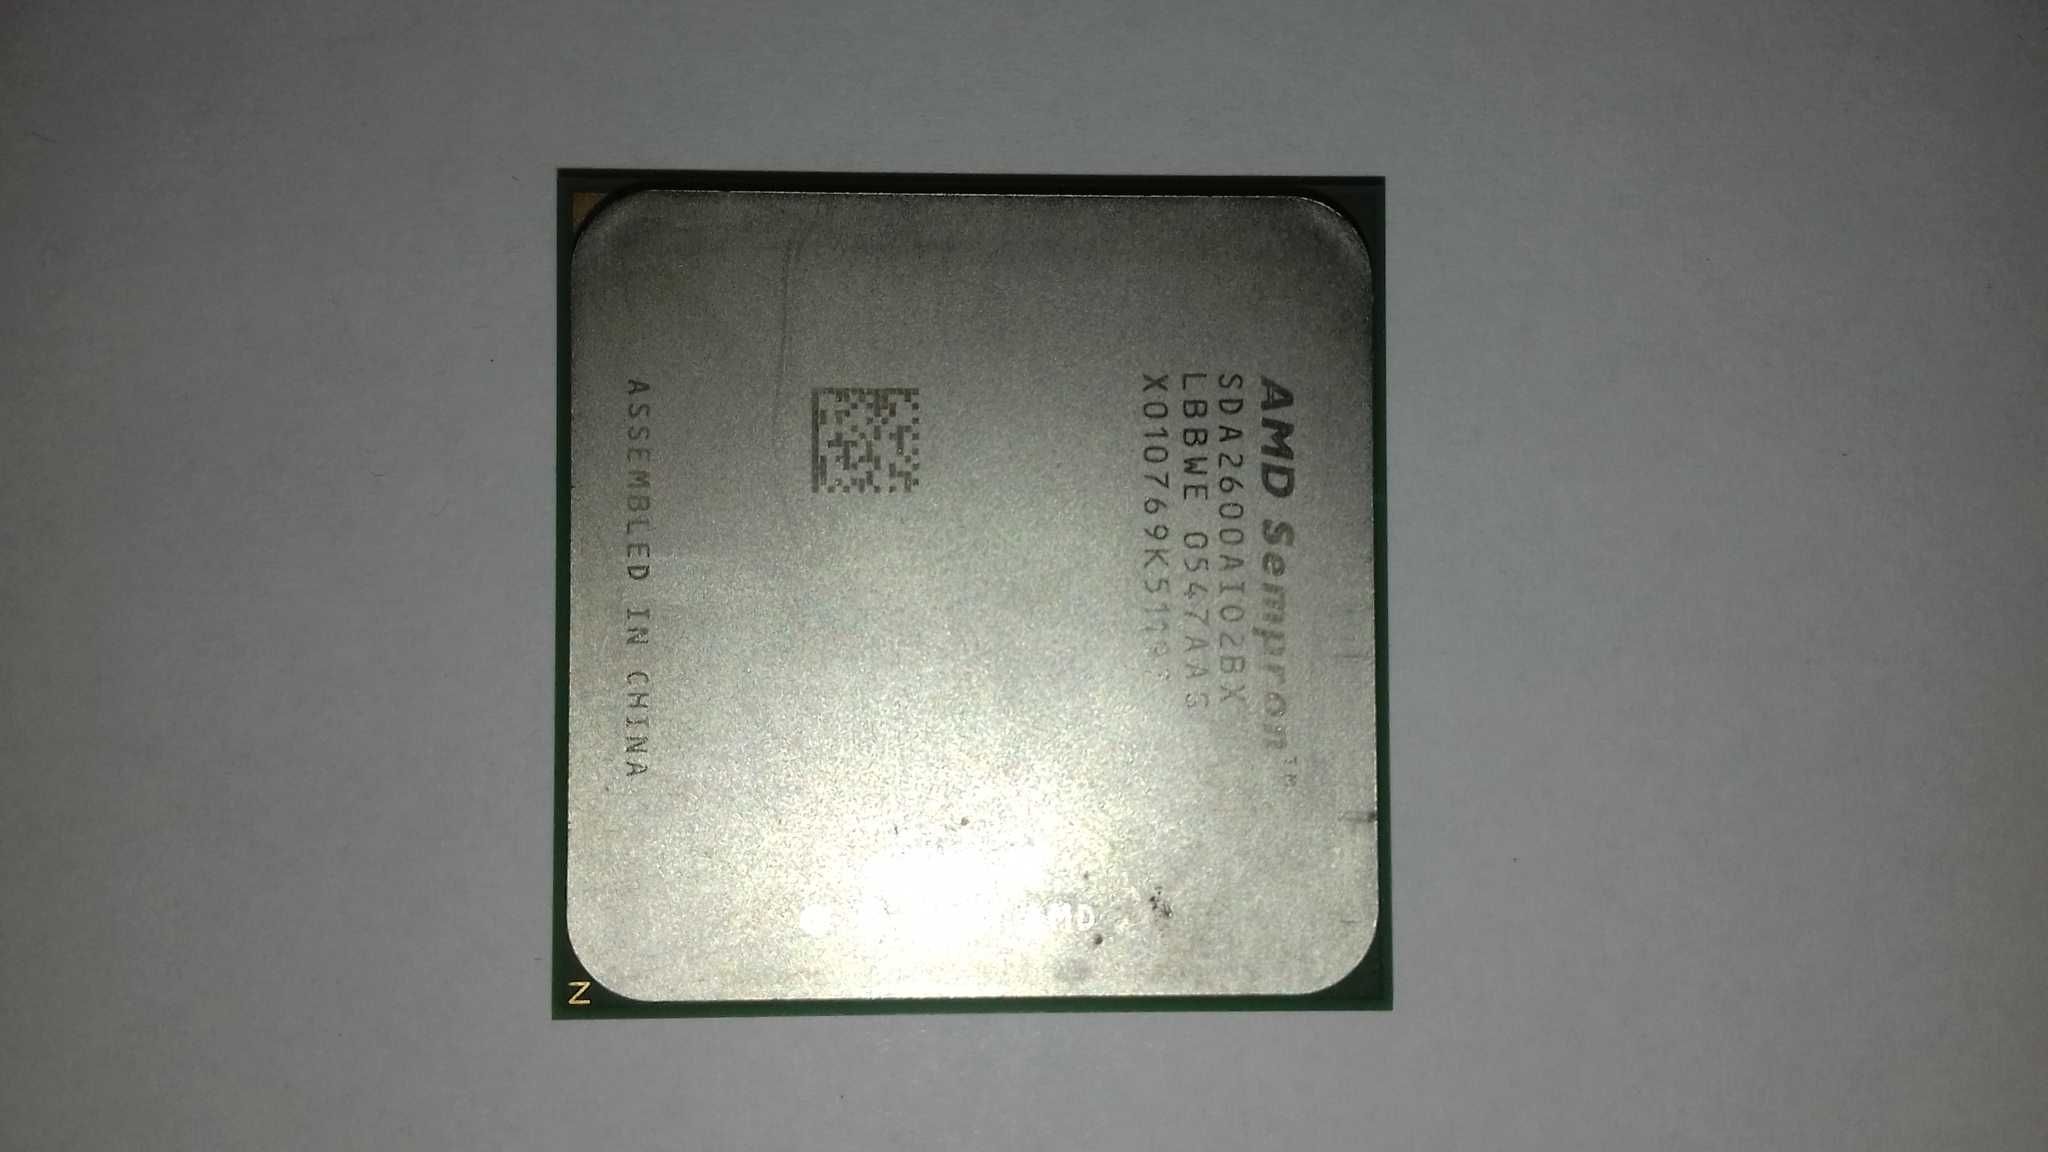 Процессор Intel Celeron 420 1.6GHz LGA 775 AMD Sempron 2600 1.6GHz 754